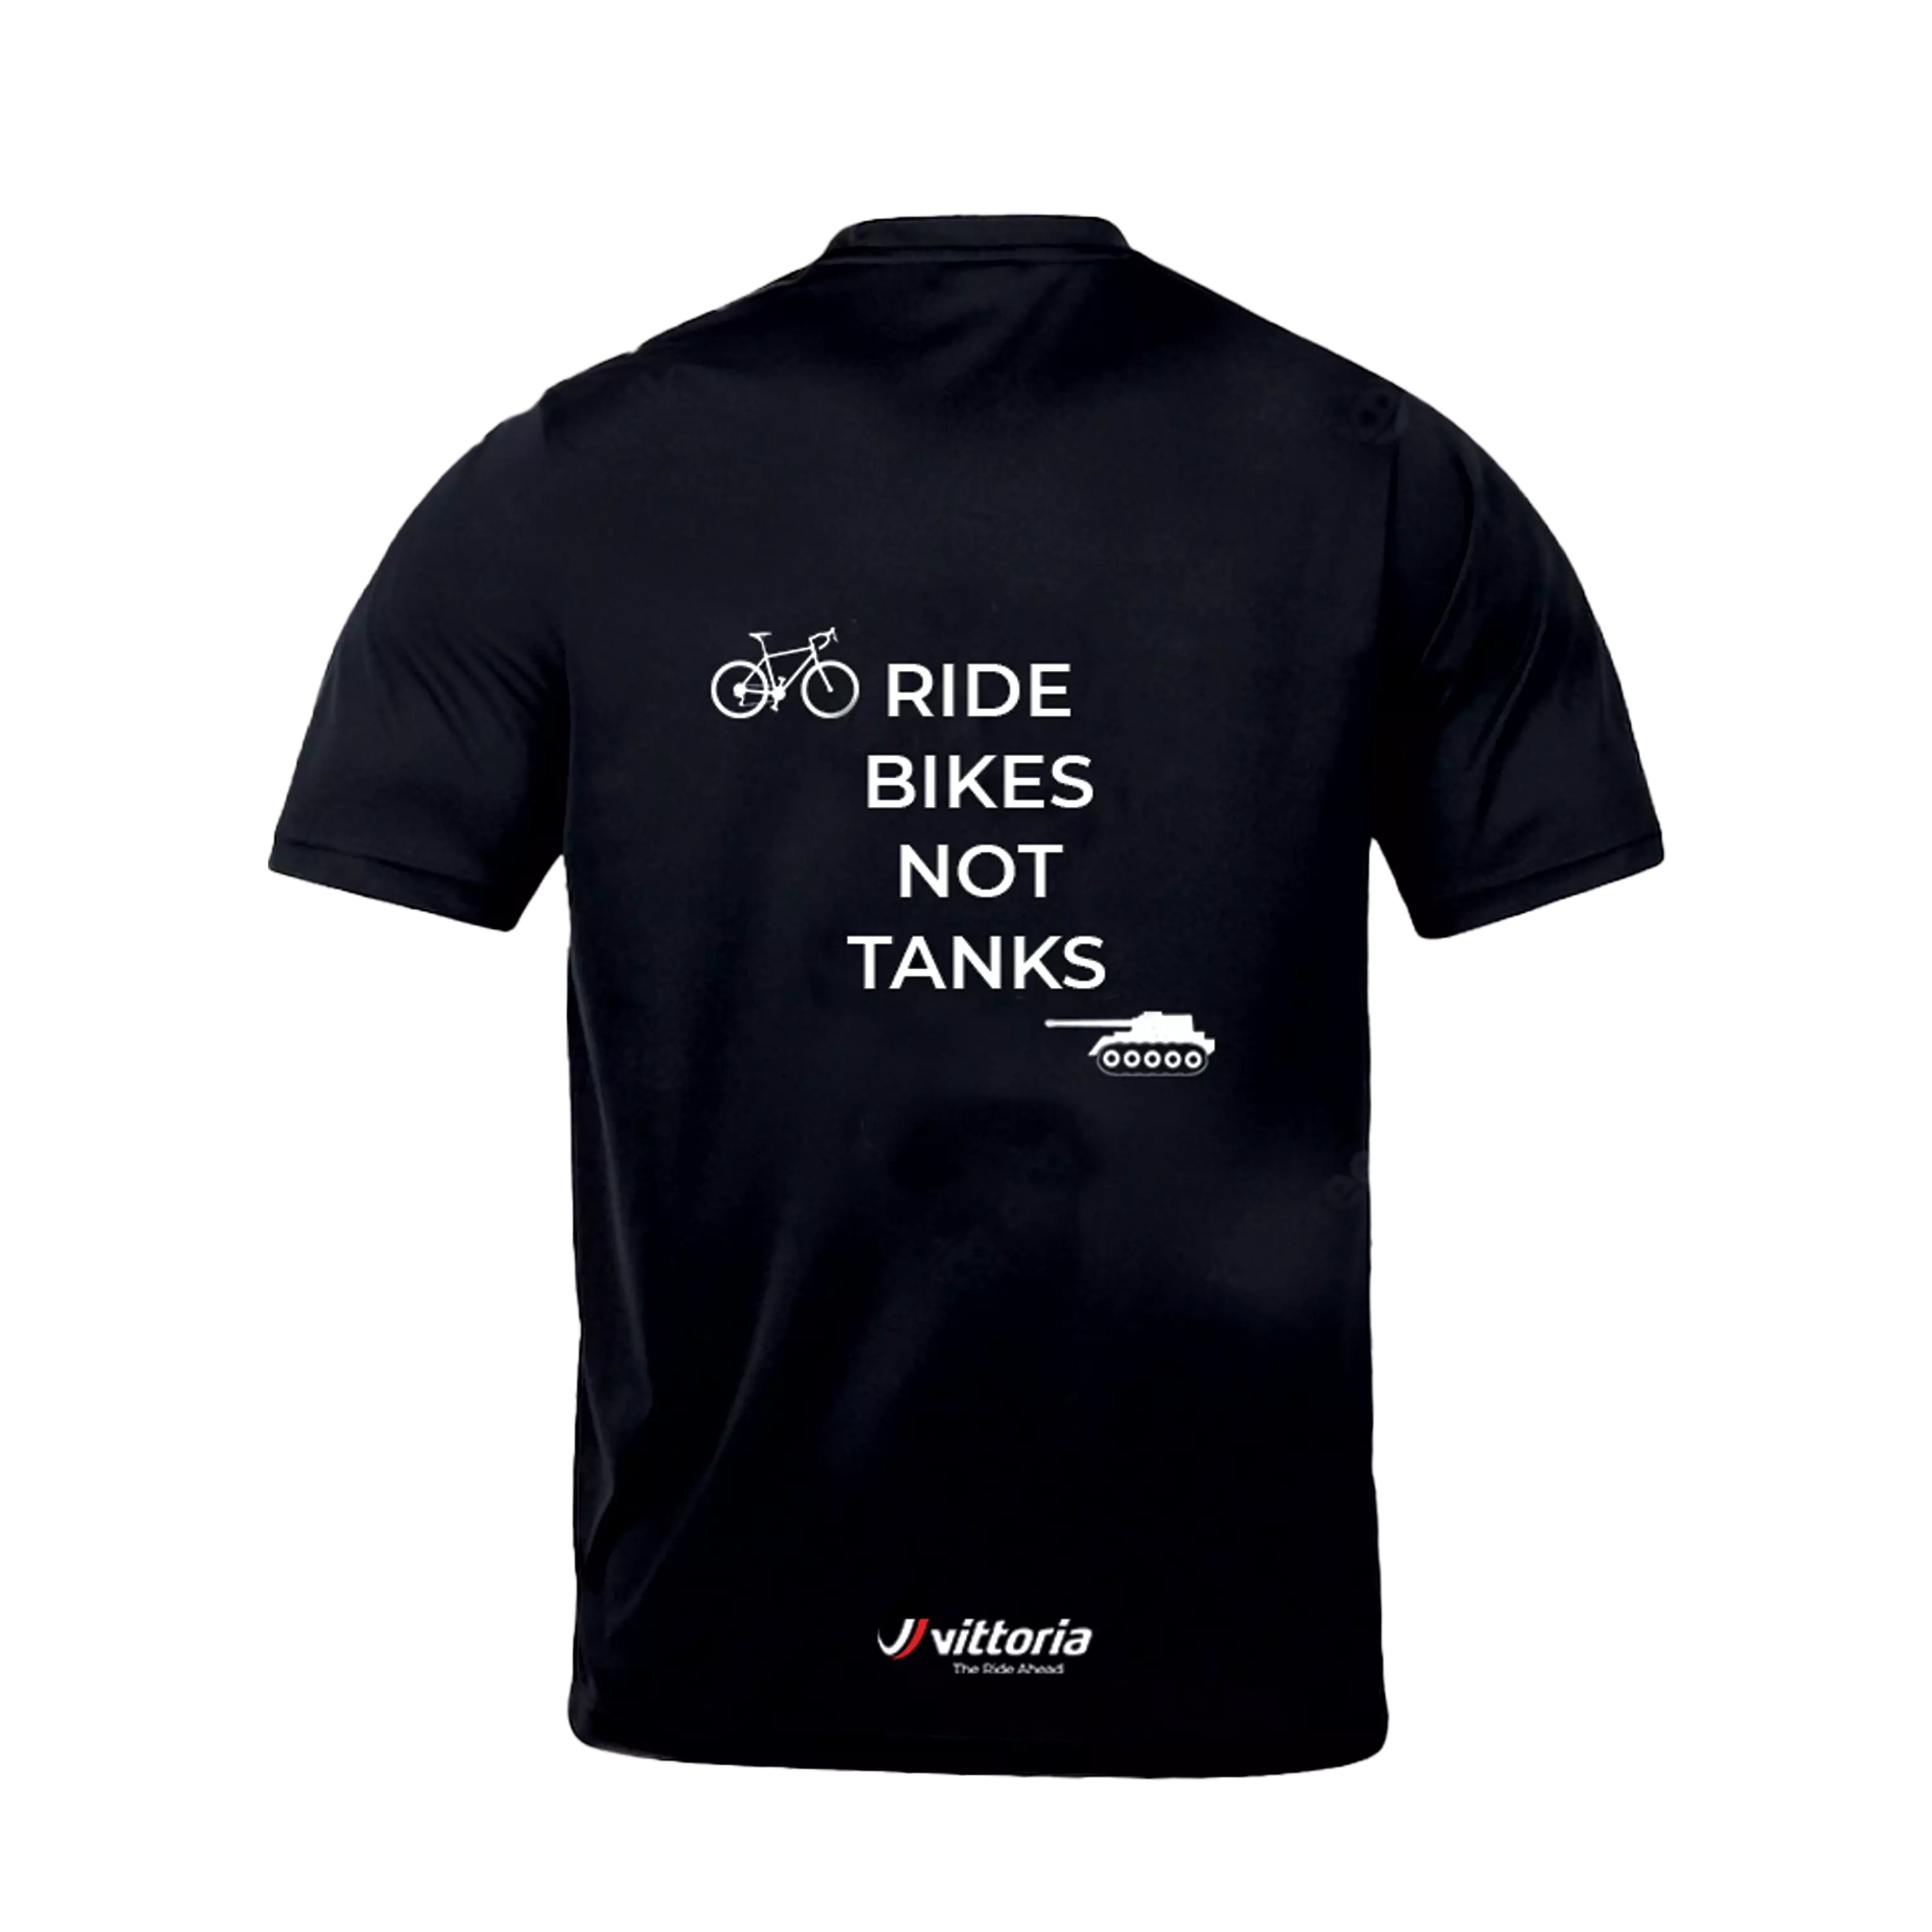 "Ride bikes not tanks" t-shirt